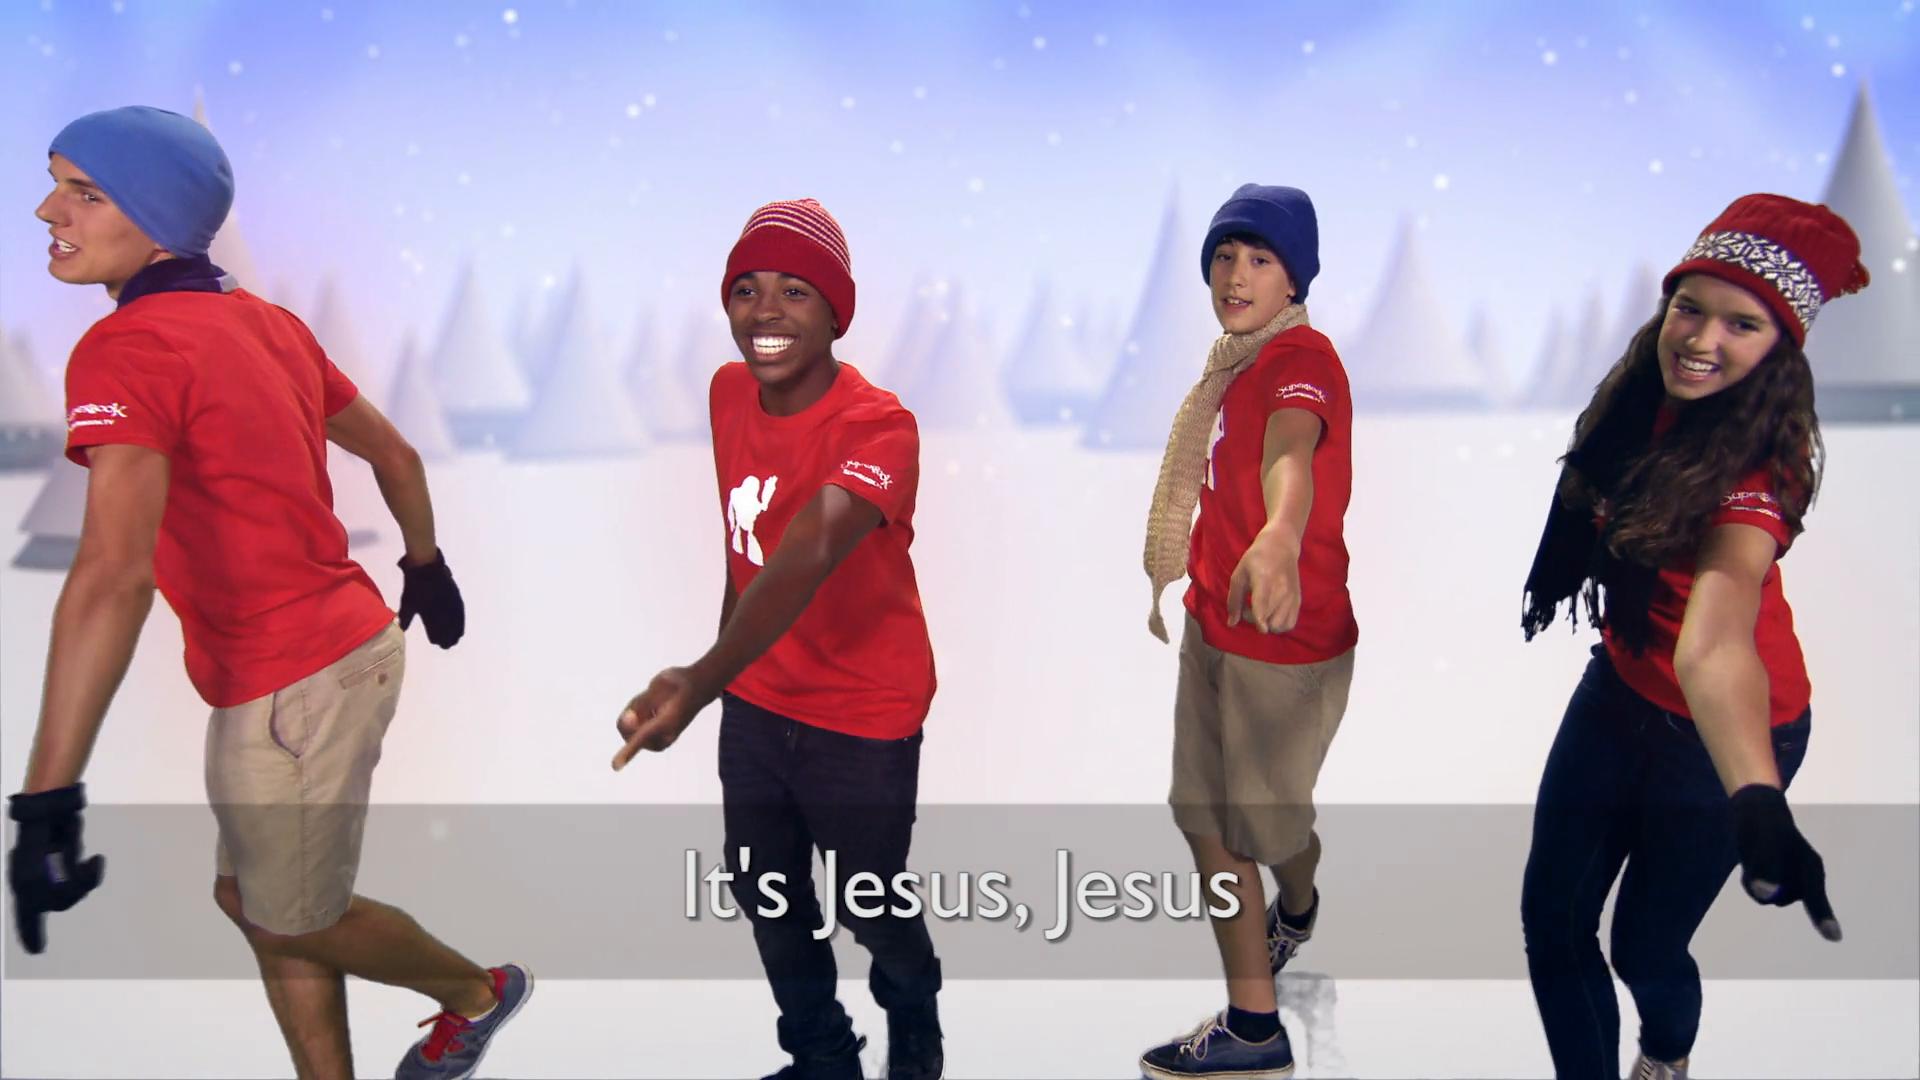 Music video: It's Jesus